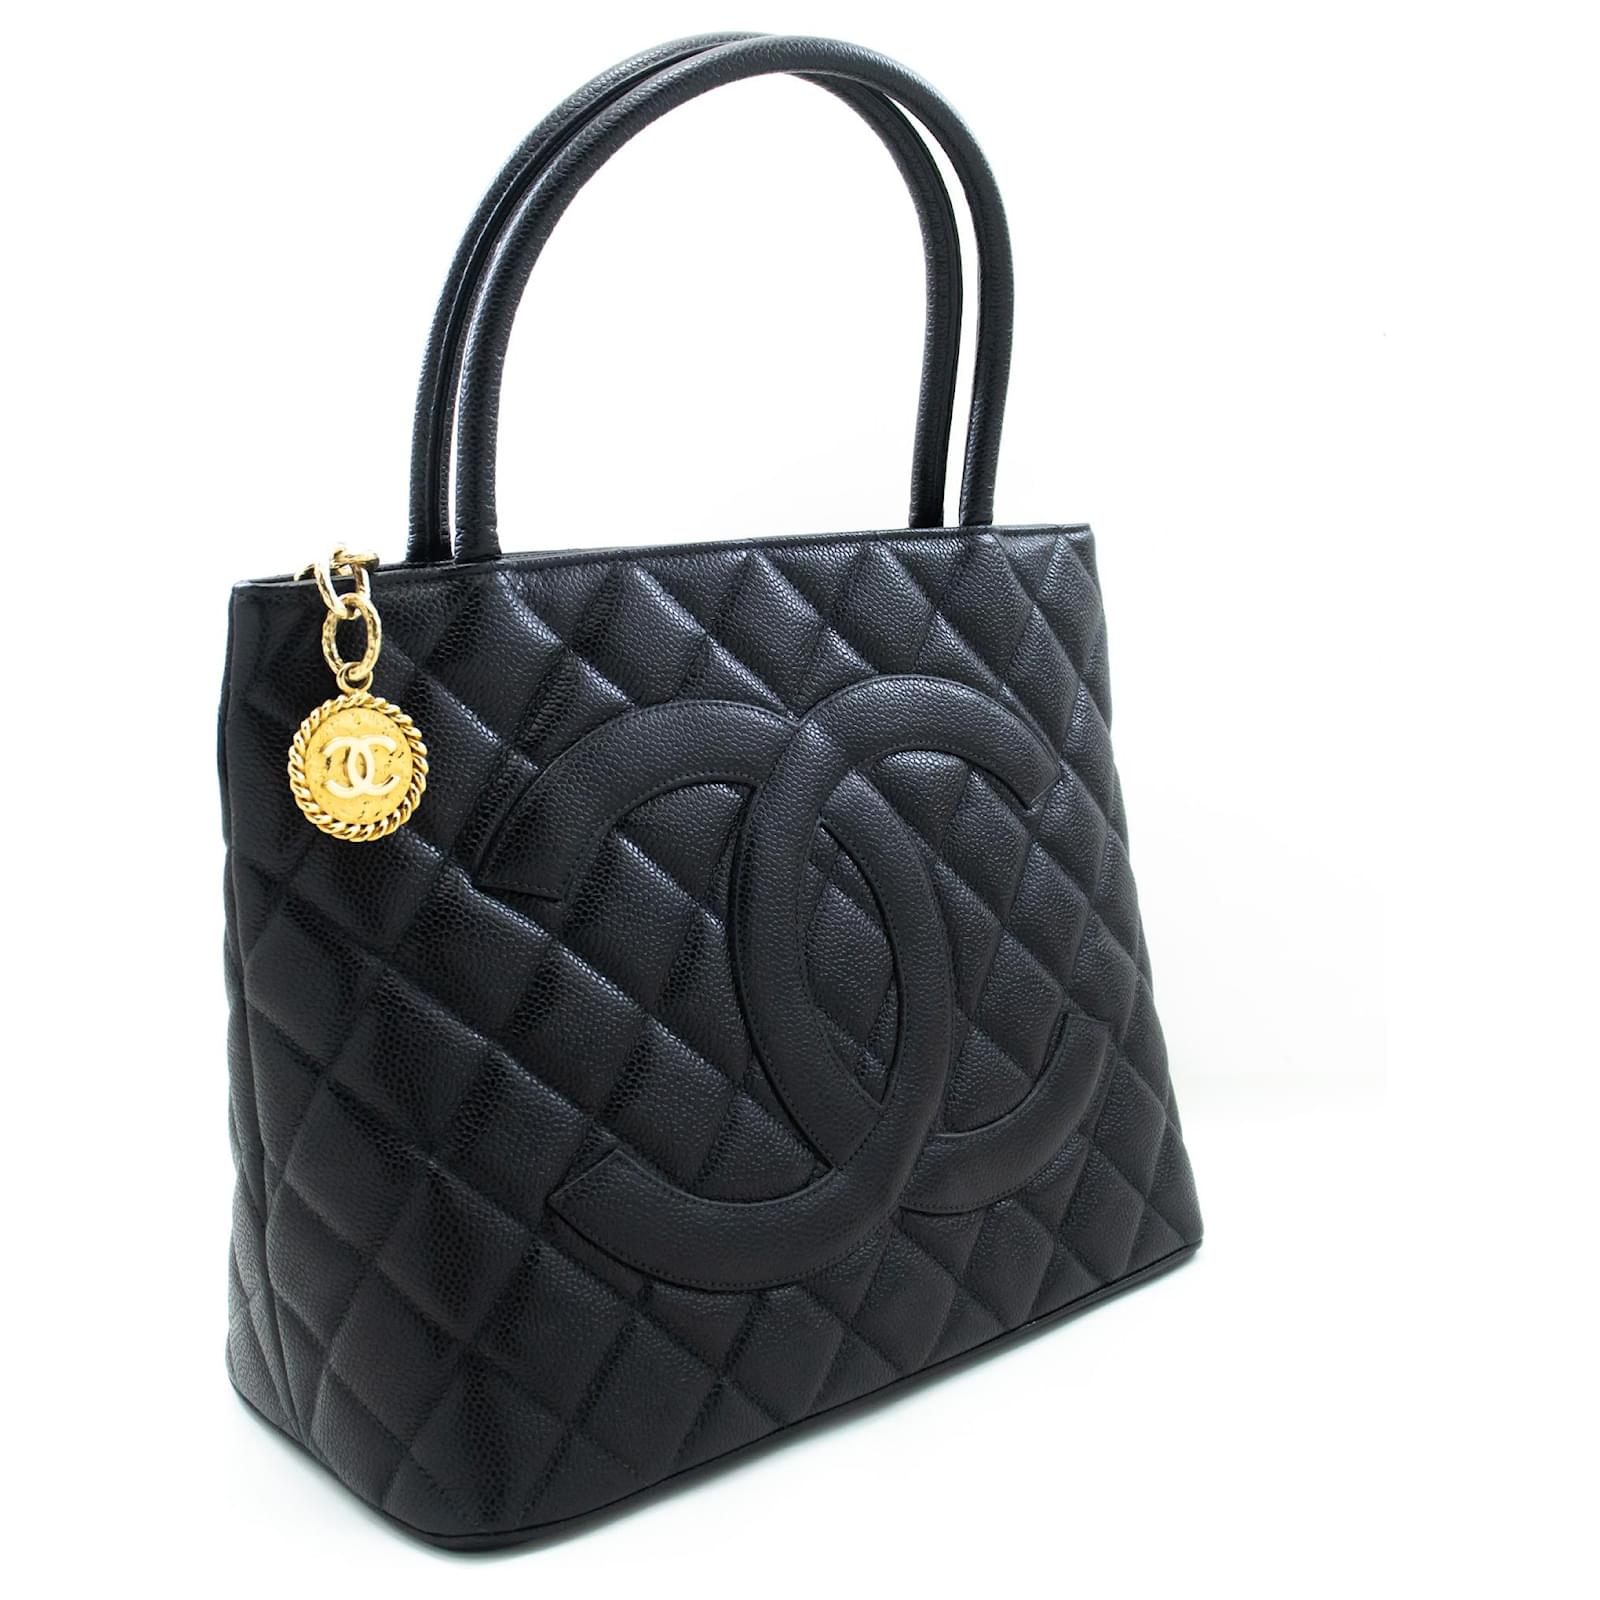 Handbags Chanel Chanel Gold Medallion Caviar Shoulder Bag Grand Shopping Tote